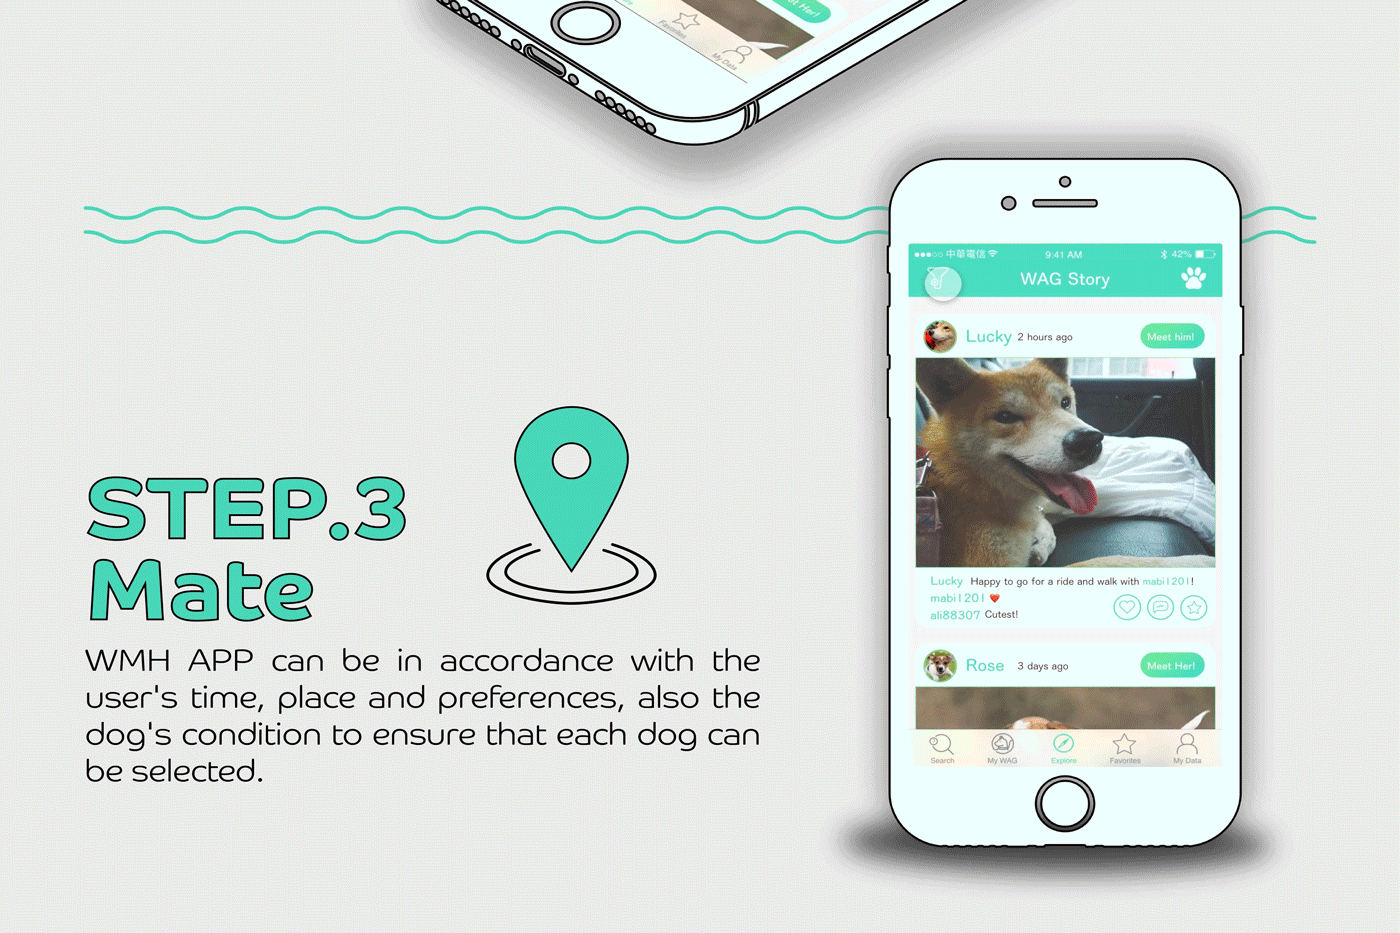 social app UI animal dog lifestyle Urban city adobeawards